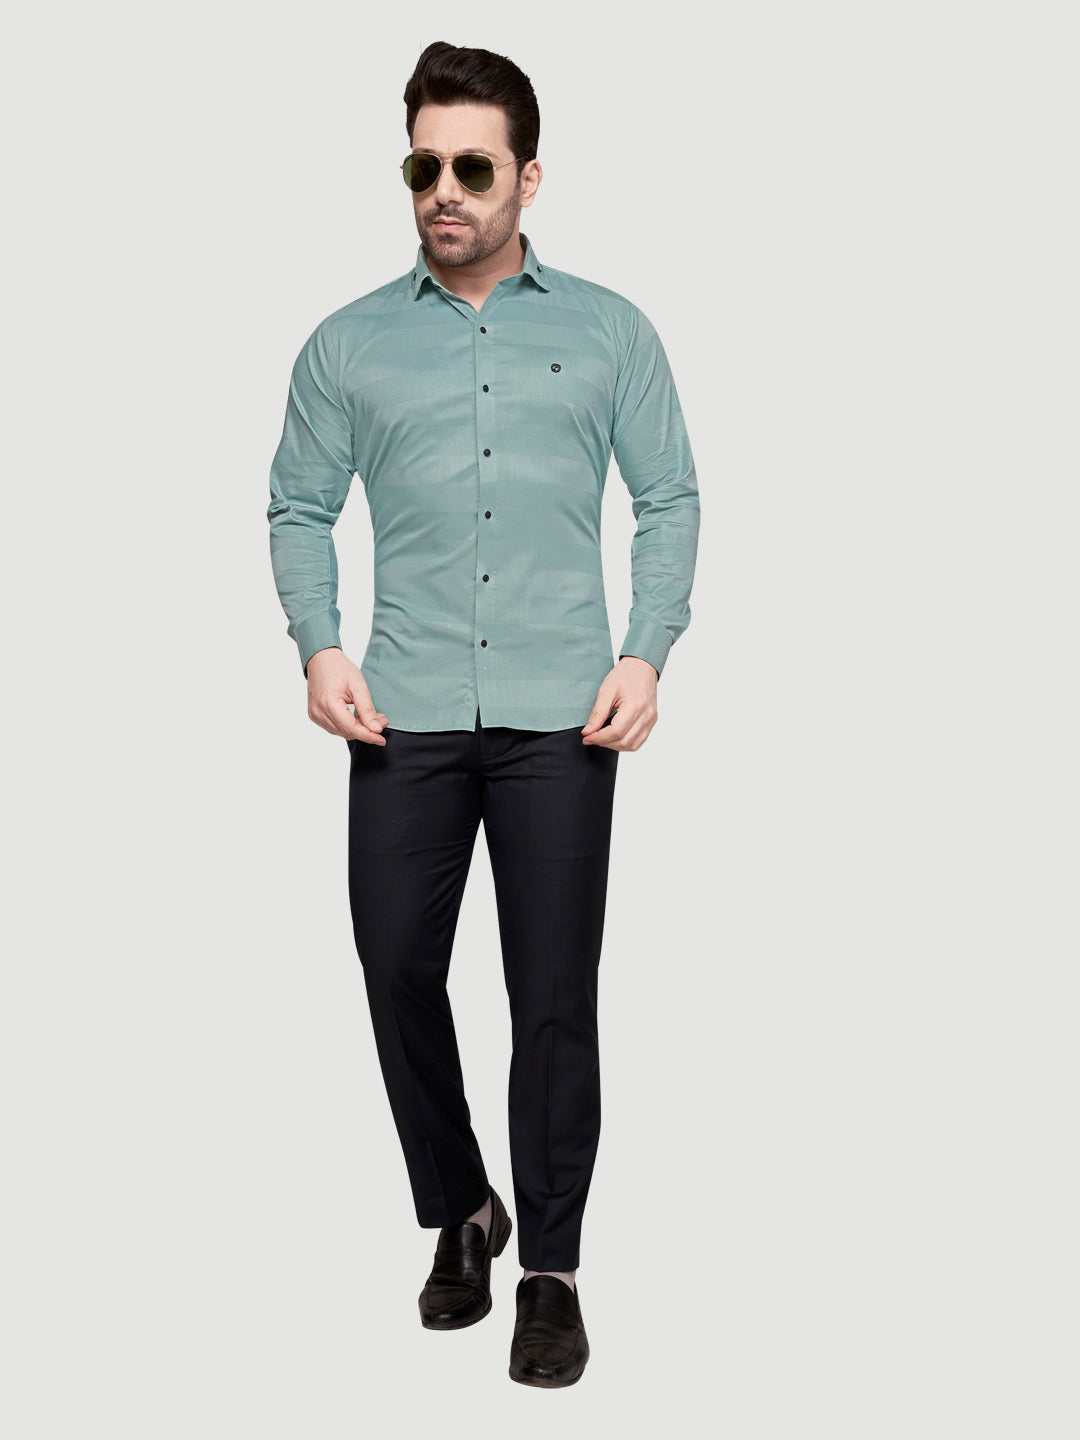 Black and White Men's Designer Shirt with Collar Accessory & Designer Broach Green